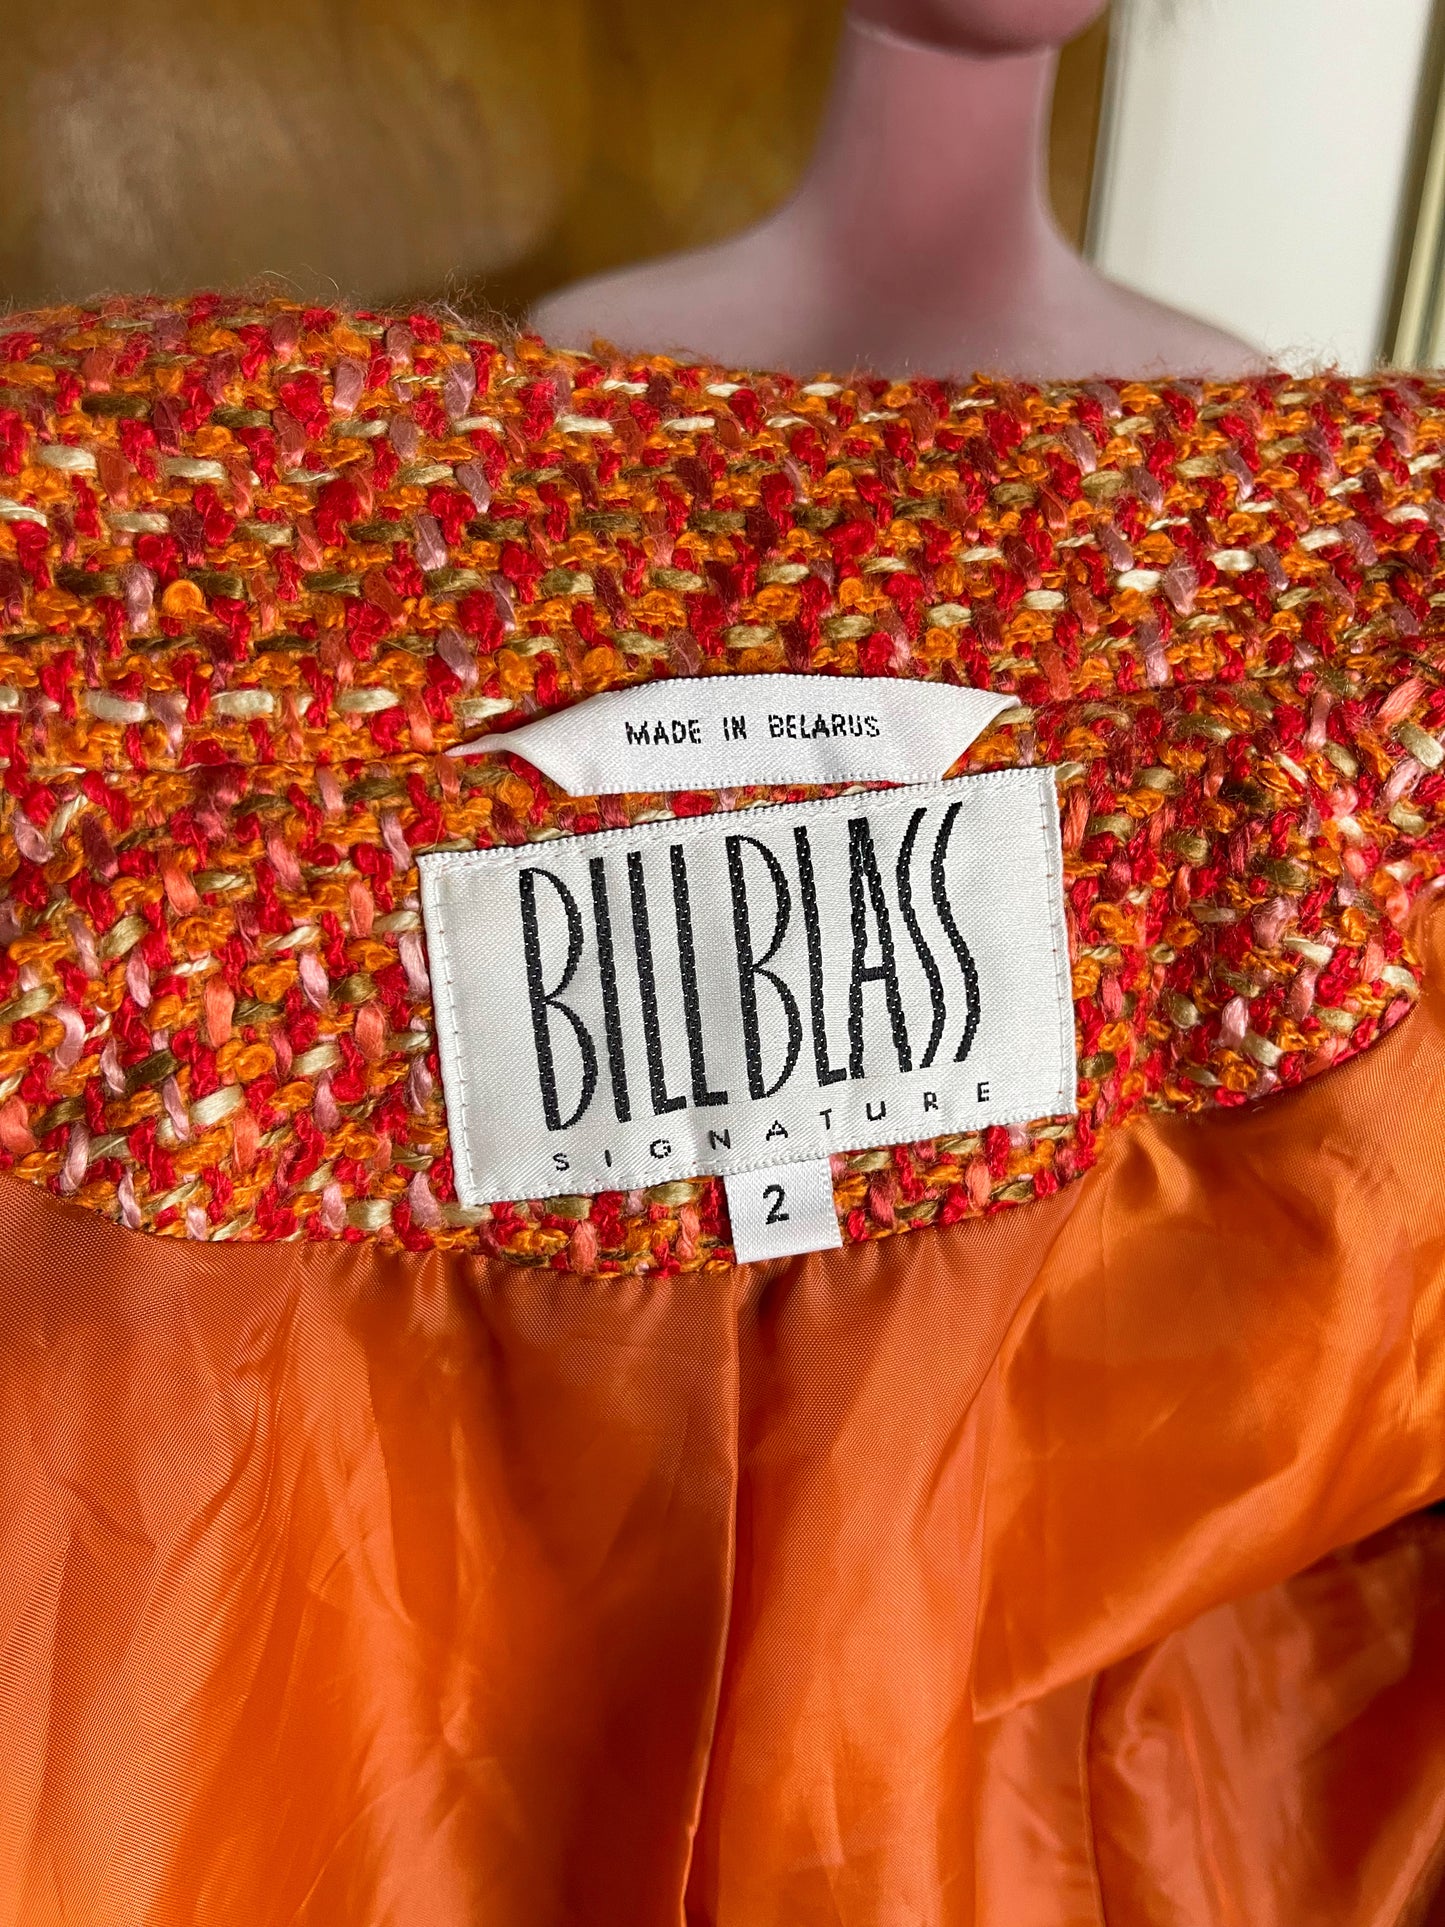 Vintage 80s / 90s "Bill Blass" Red Orange Tweed Coat Best Fits Size S